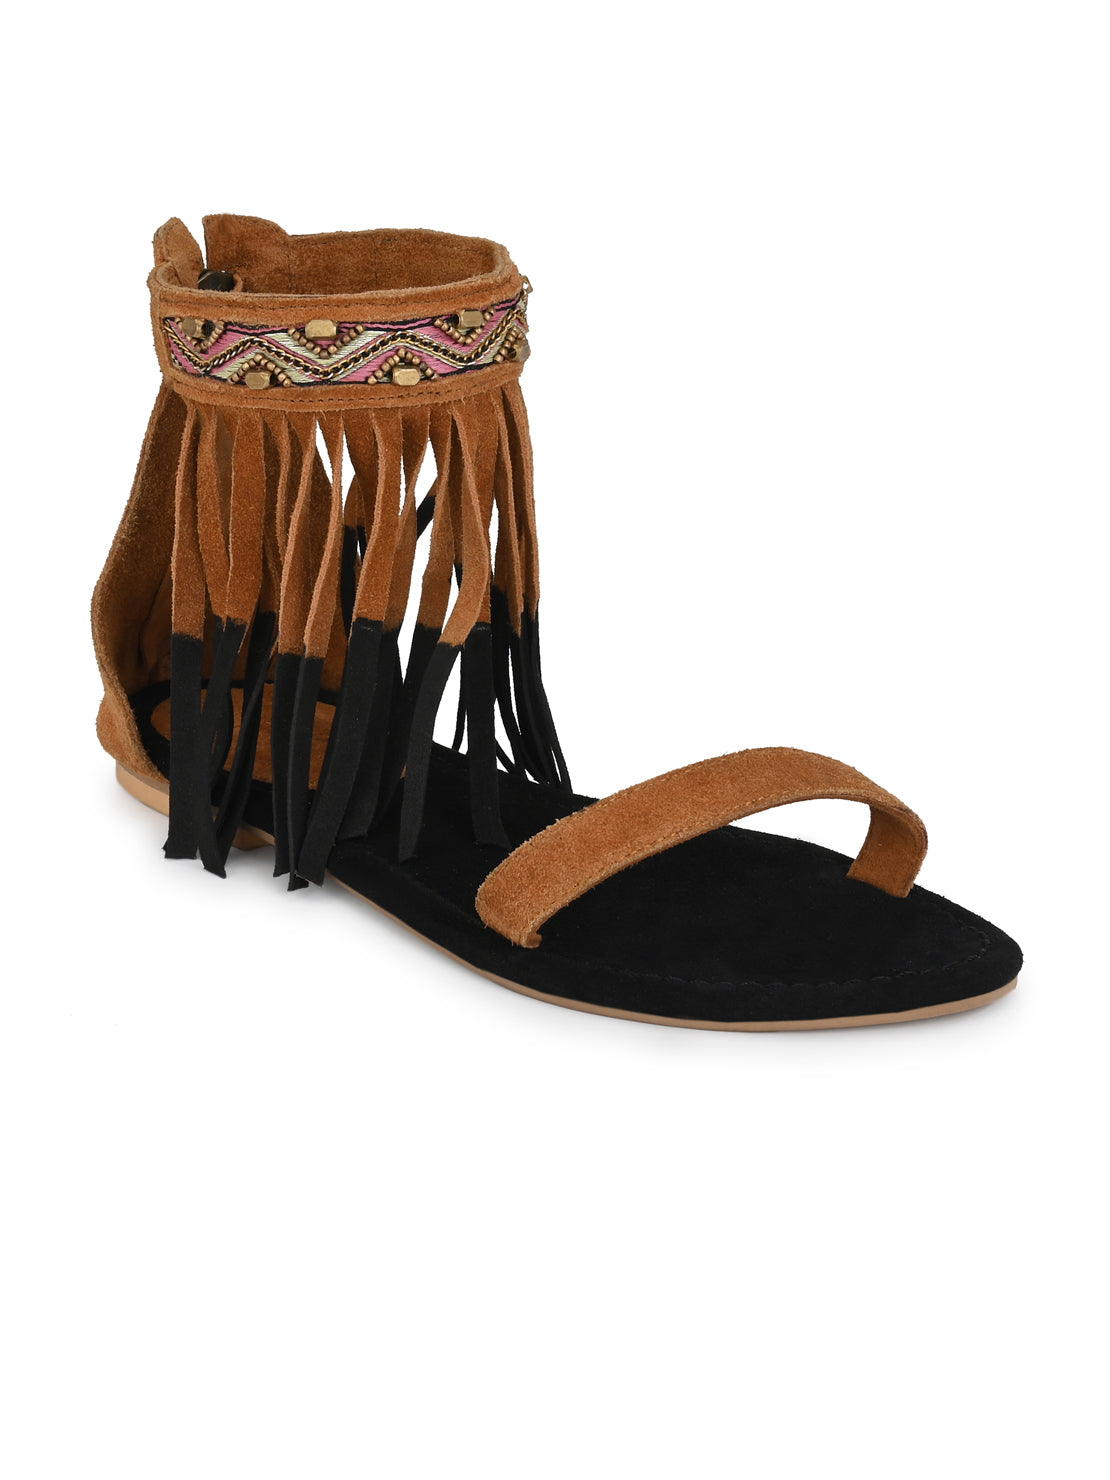 Aady Austin Women Tan Gladiator Open Toe Flats Sandals (AUSF19016)